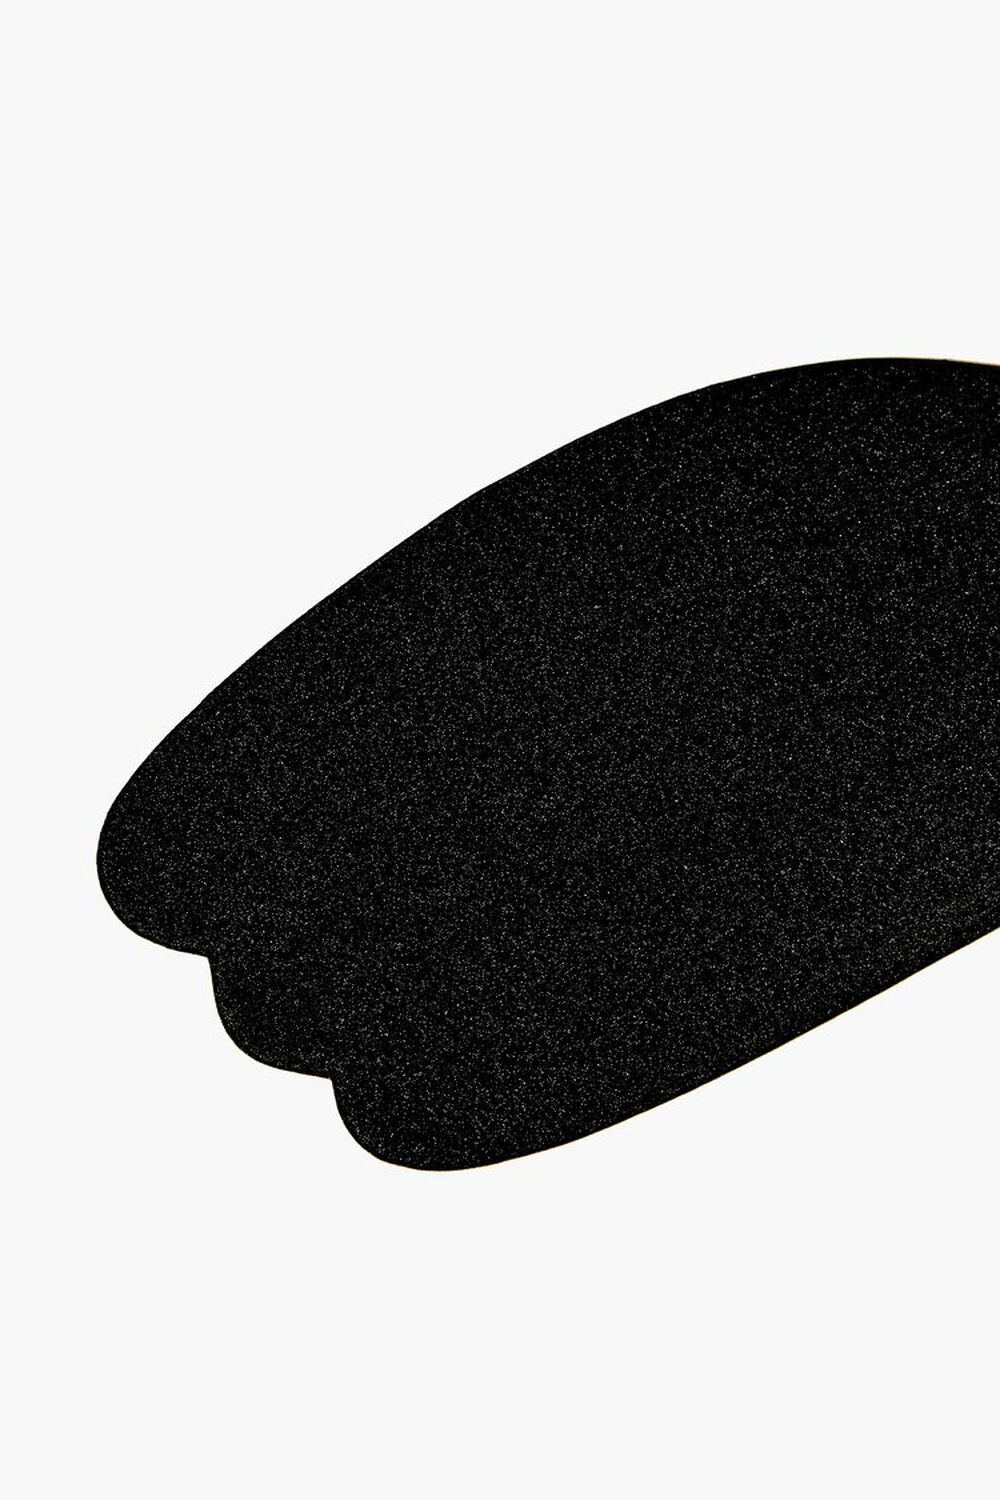 BLACK Reusable Adhesive Strapless Bra, image 2